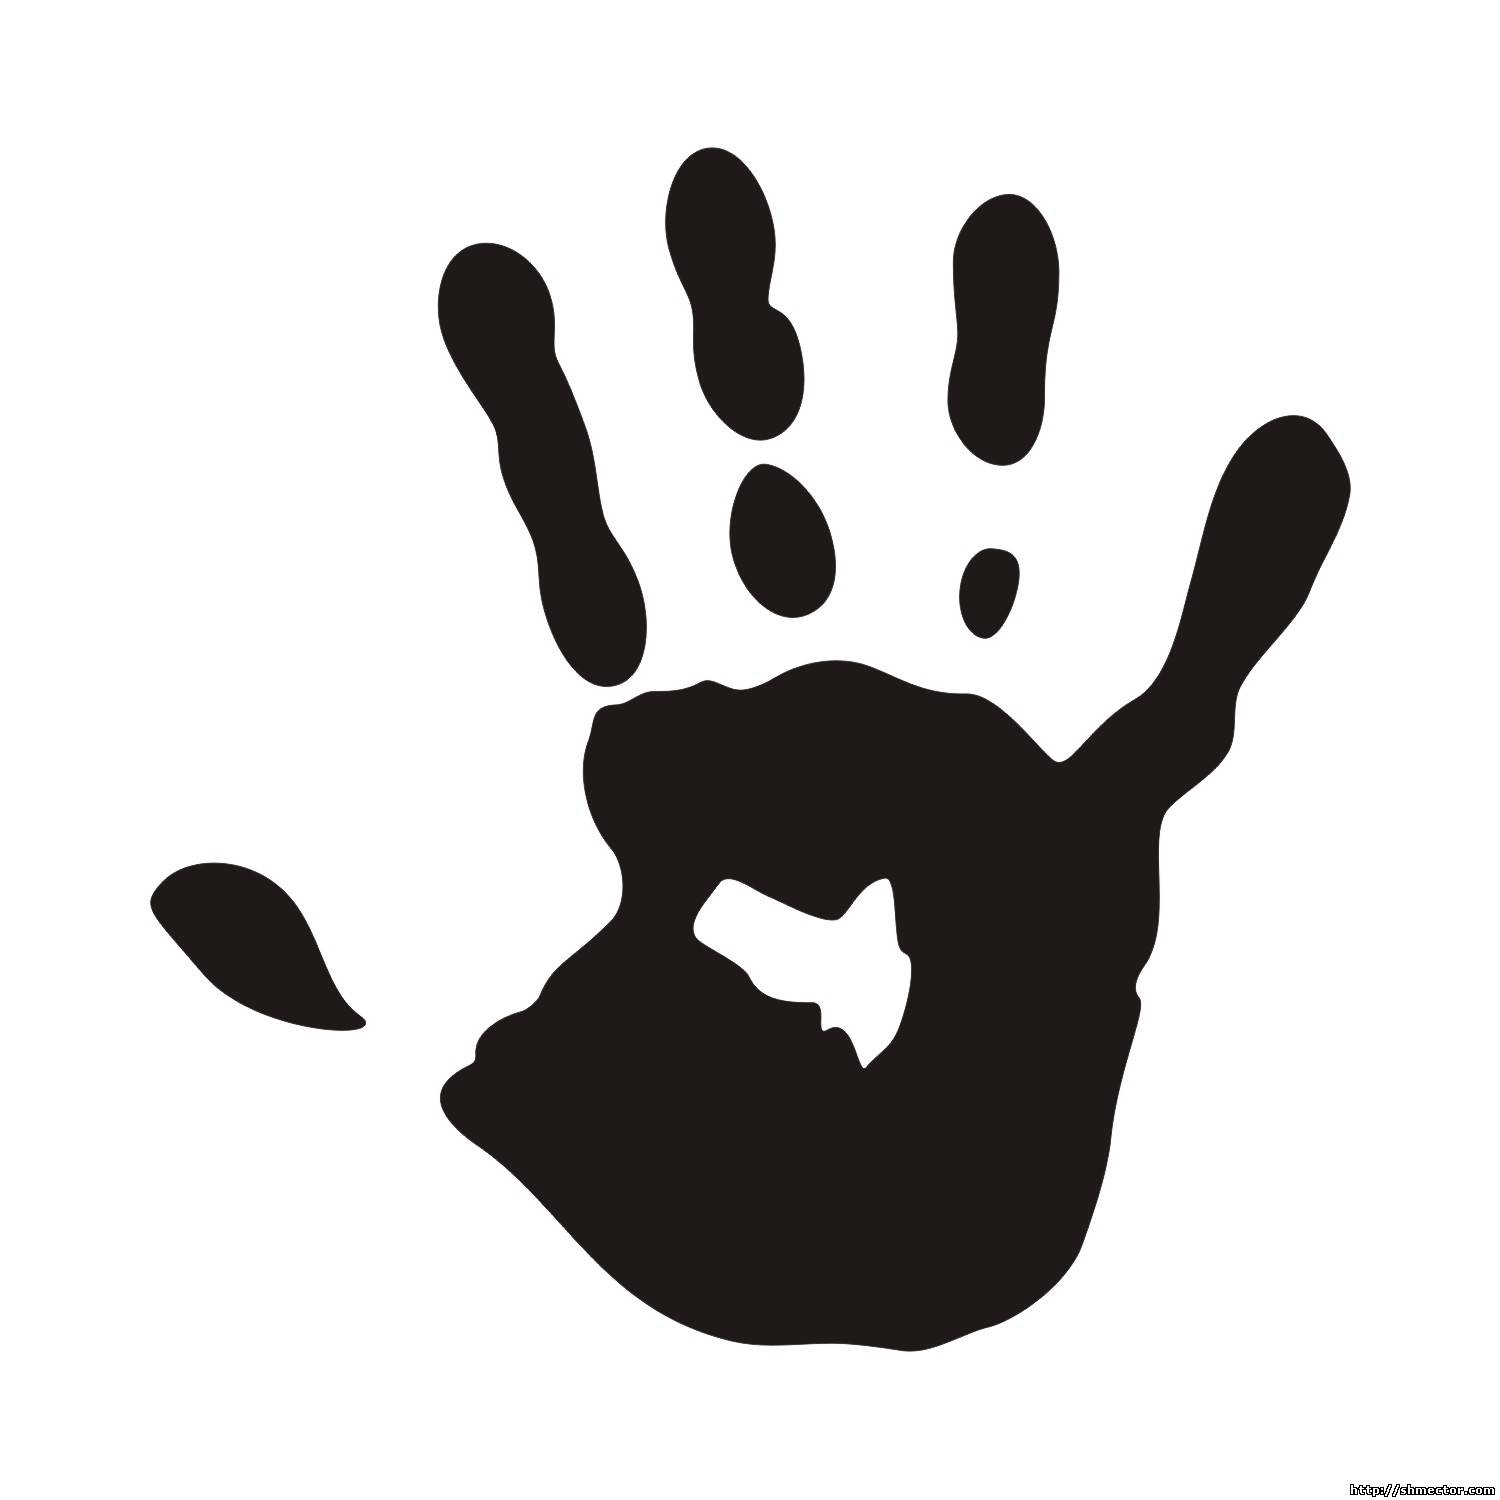 Handprint clipart vector. Free baby download clip